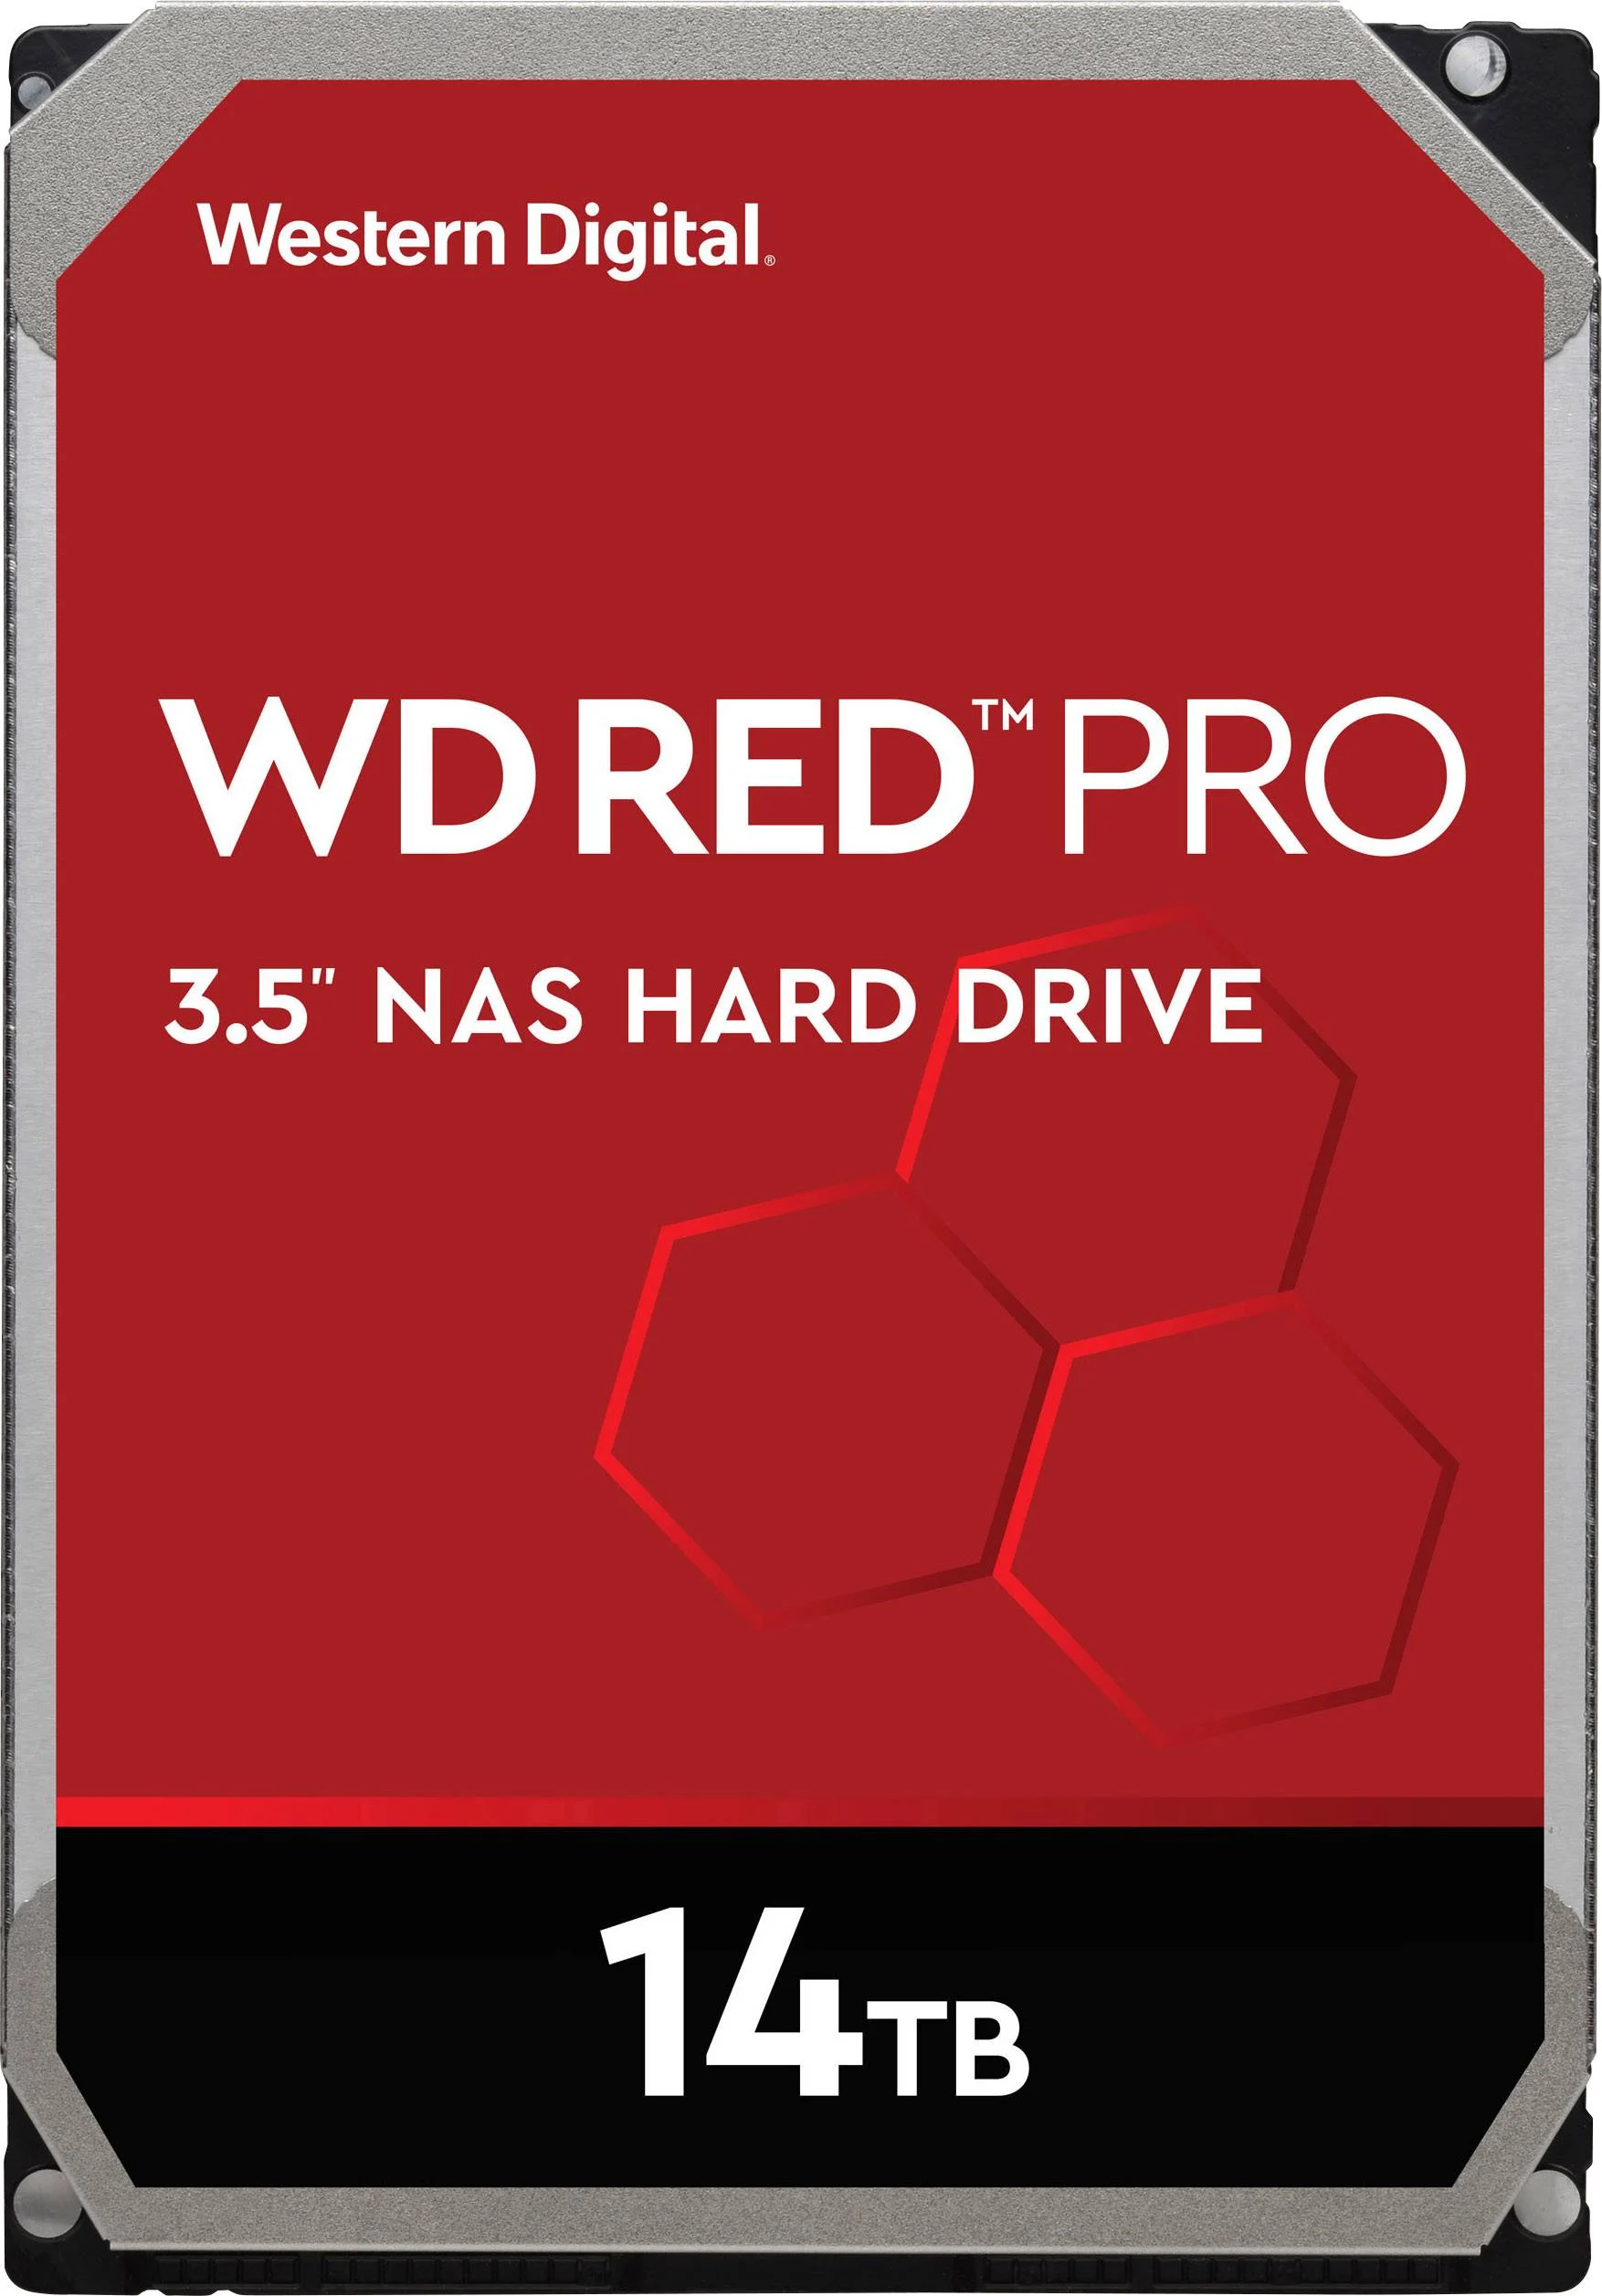 картинка Жесткий диск для NAS систем HDD 14Tb Western Digital Red PRO SATA3 3,5" (WD141KFGX) от магазина itmag.kz